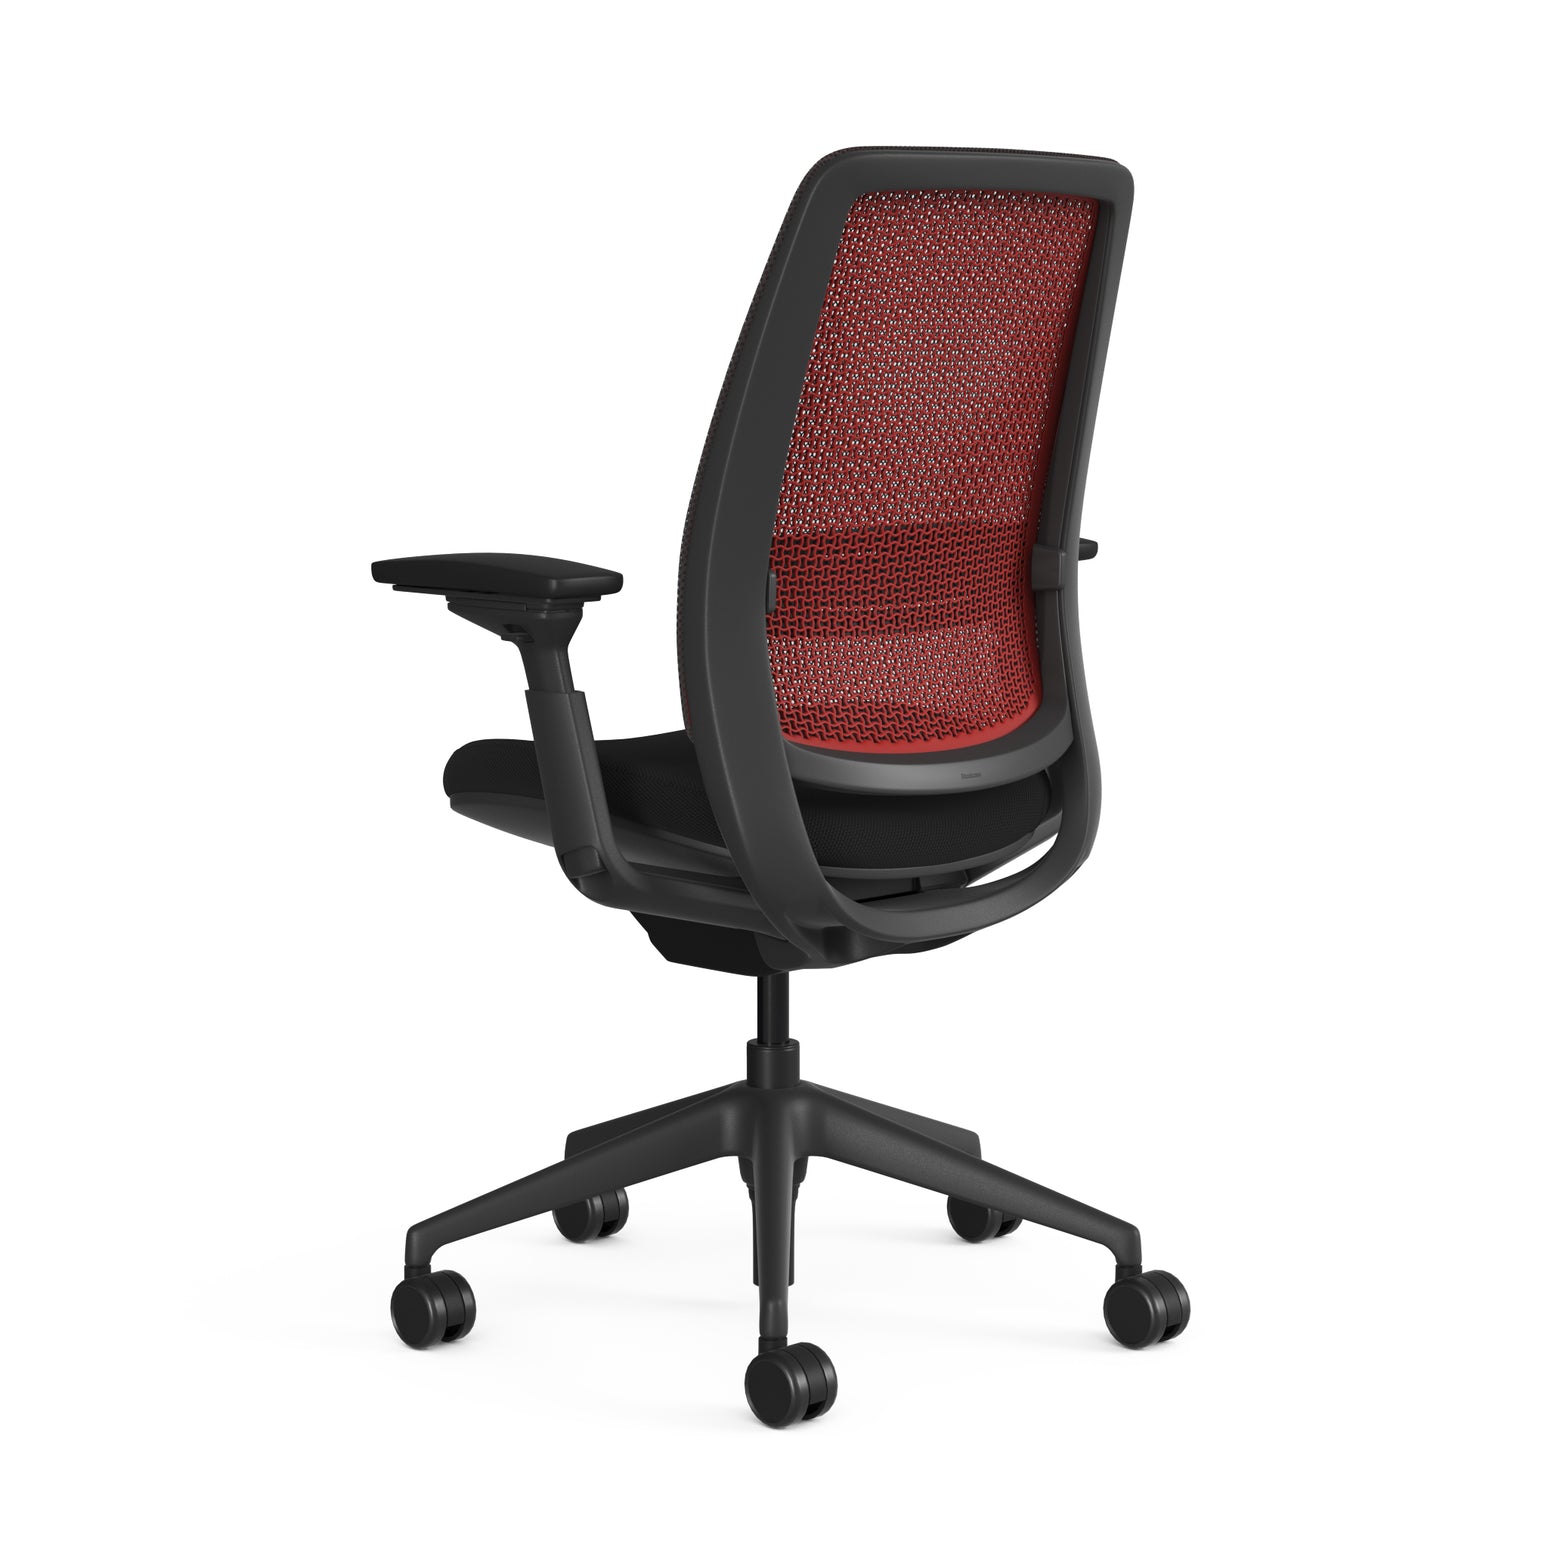 Meshback 3D Microknit Scarlet; Adjustable Lumbar; Seat Cogent Connect Licorice; Frame Black